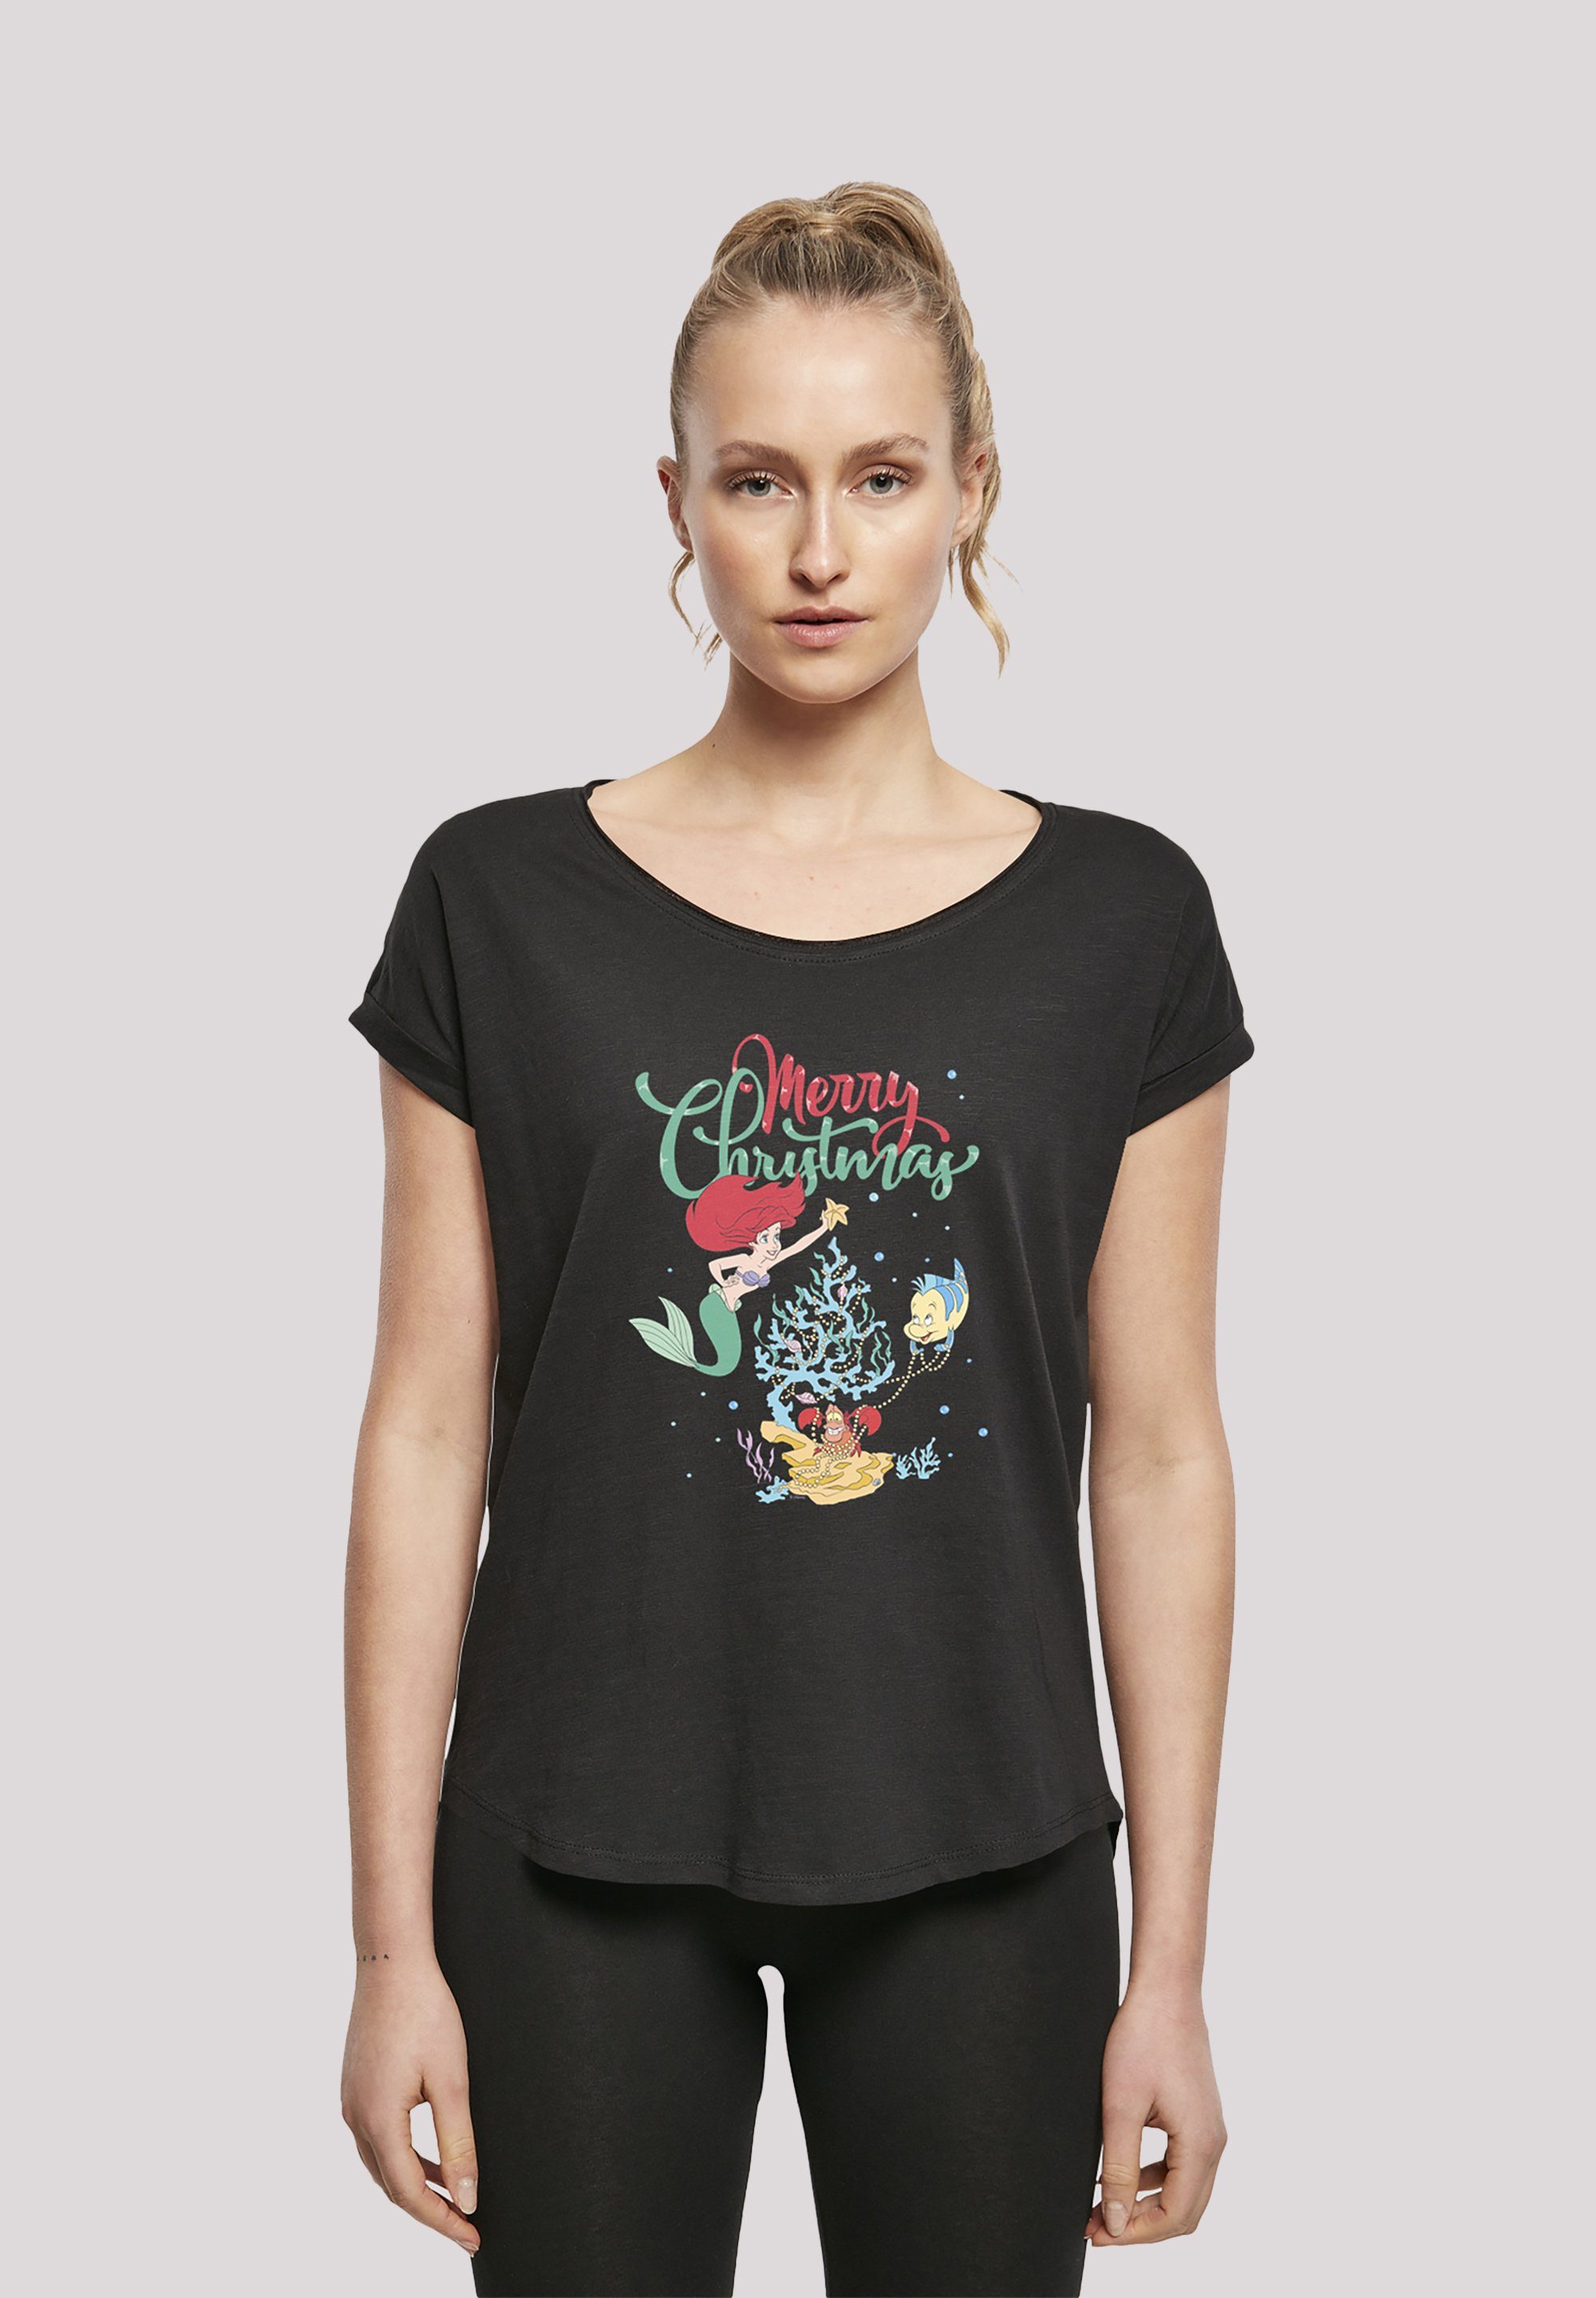 die Disney Print Meerjungfrau T-Shirt Christmas Merry Arielle F4NT4STIC